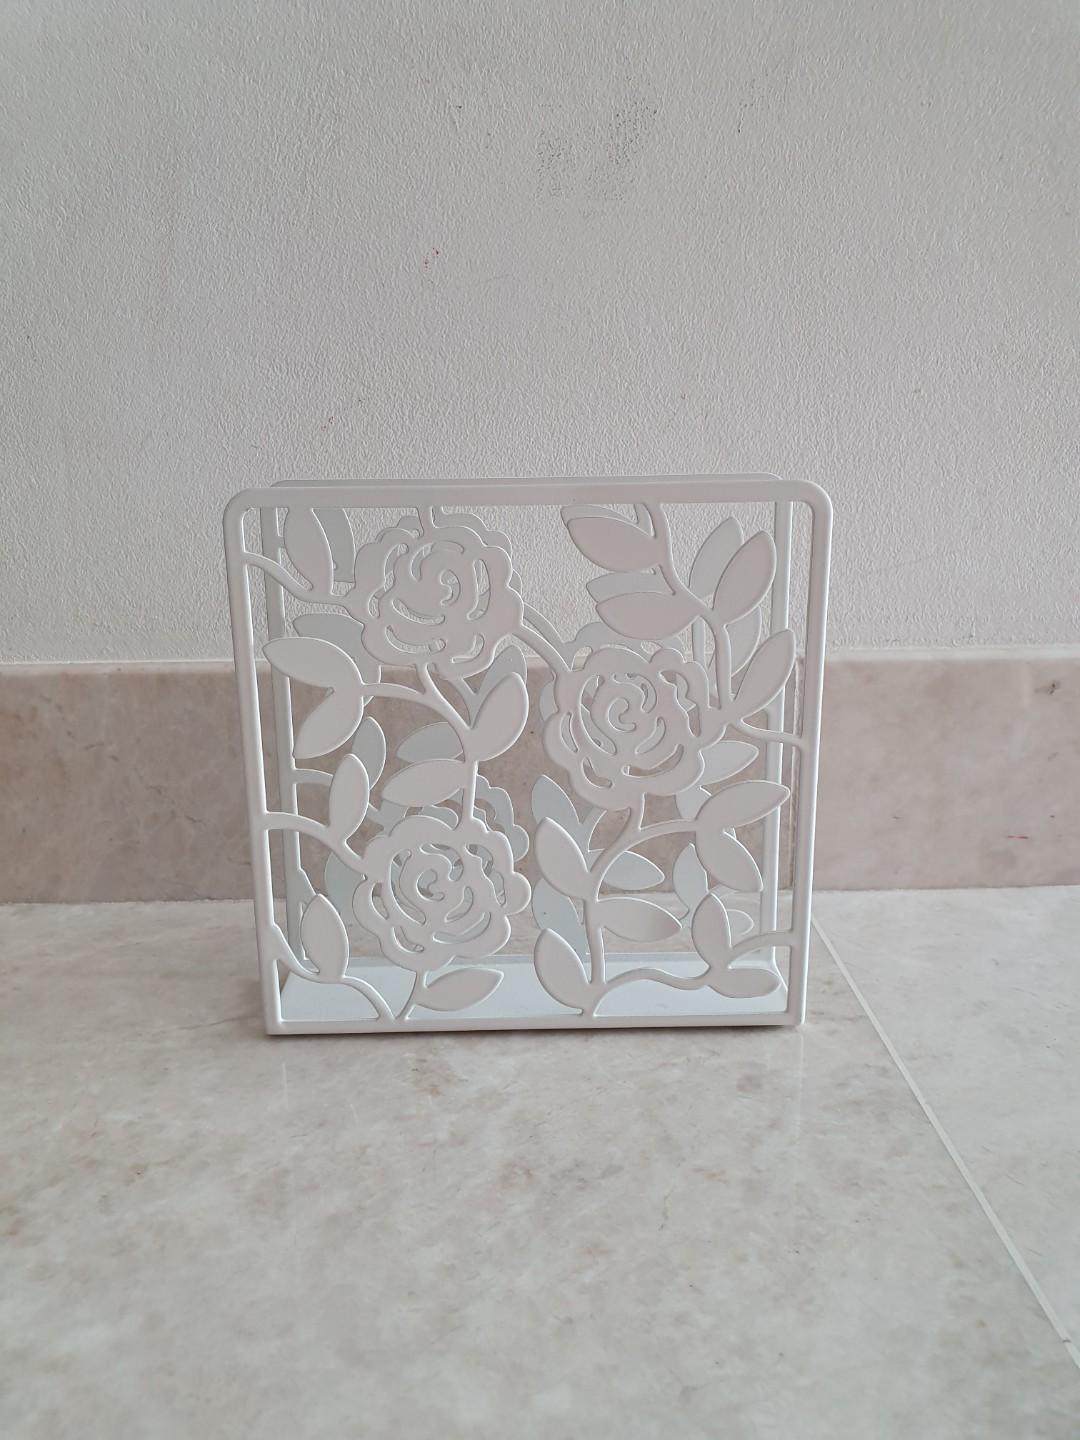 IKEA Metal Napkin Holder White Floral Design